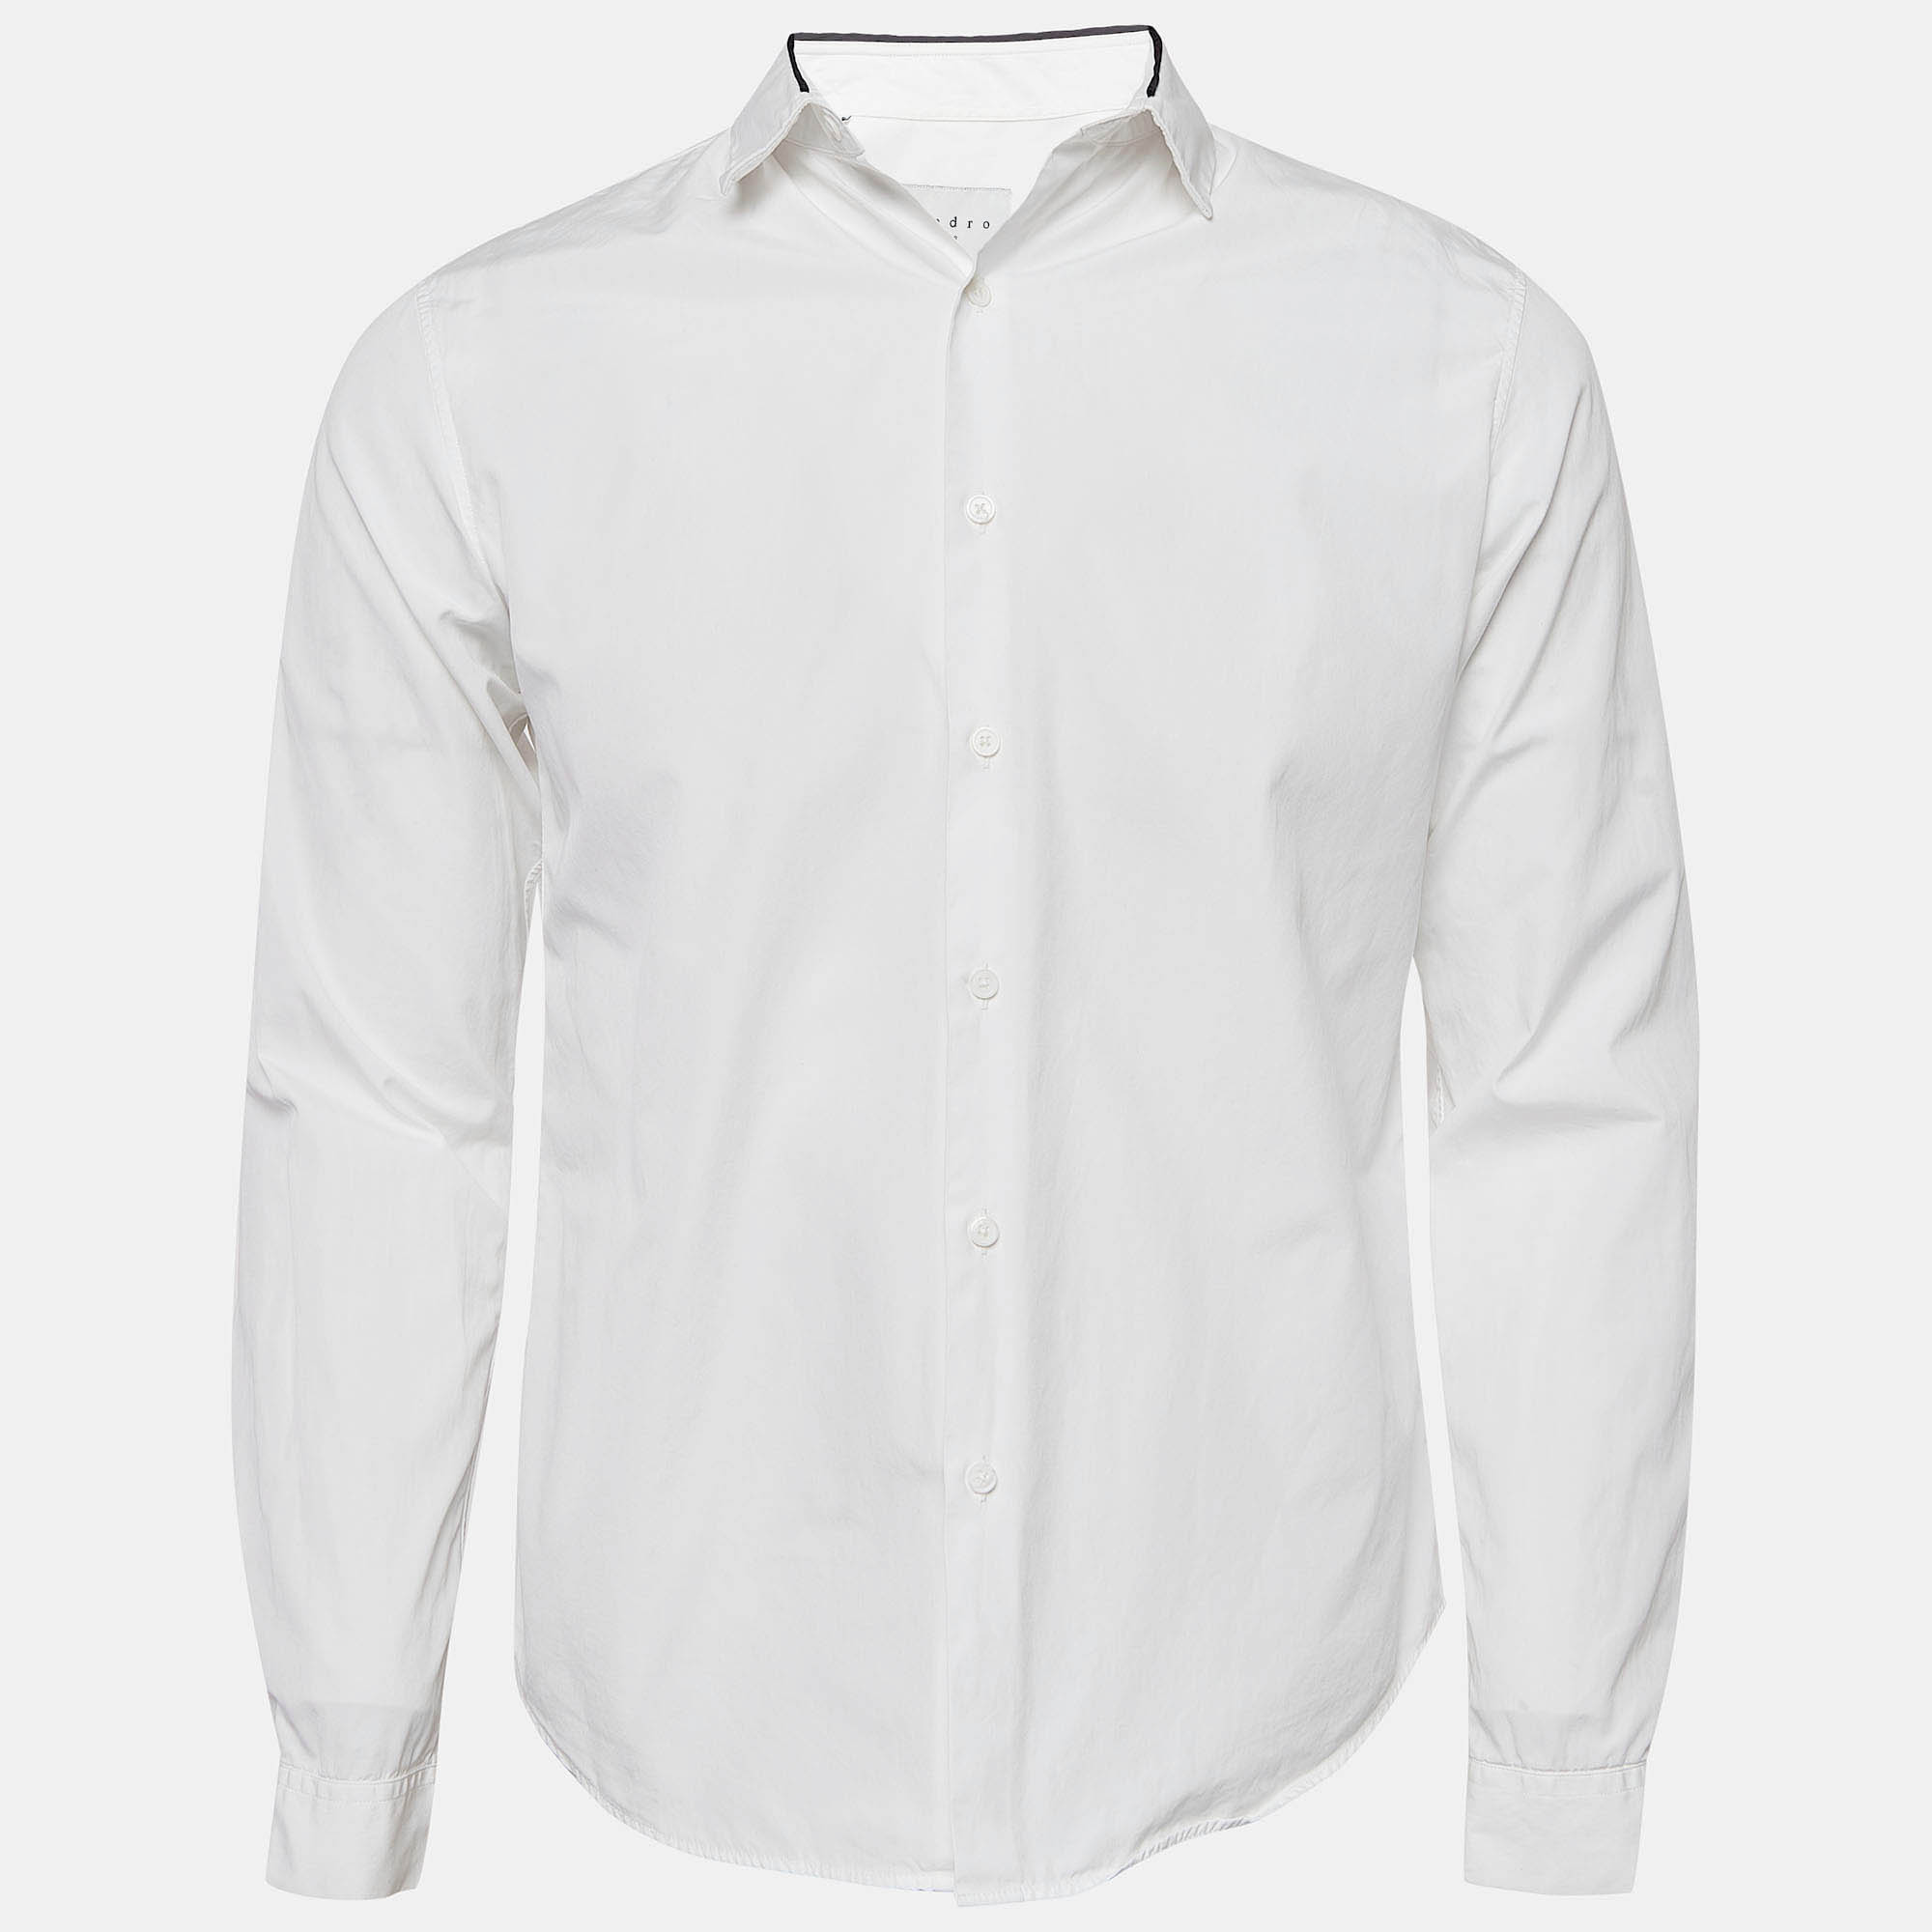 Sandro white cotton long sleeve shirt s